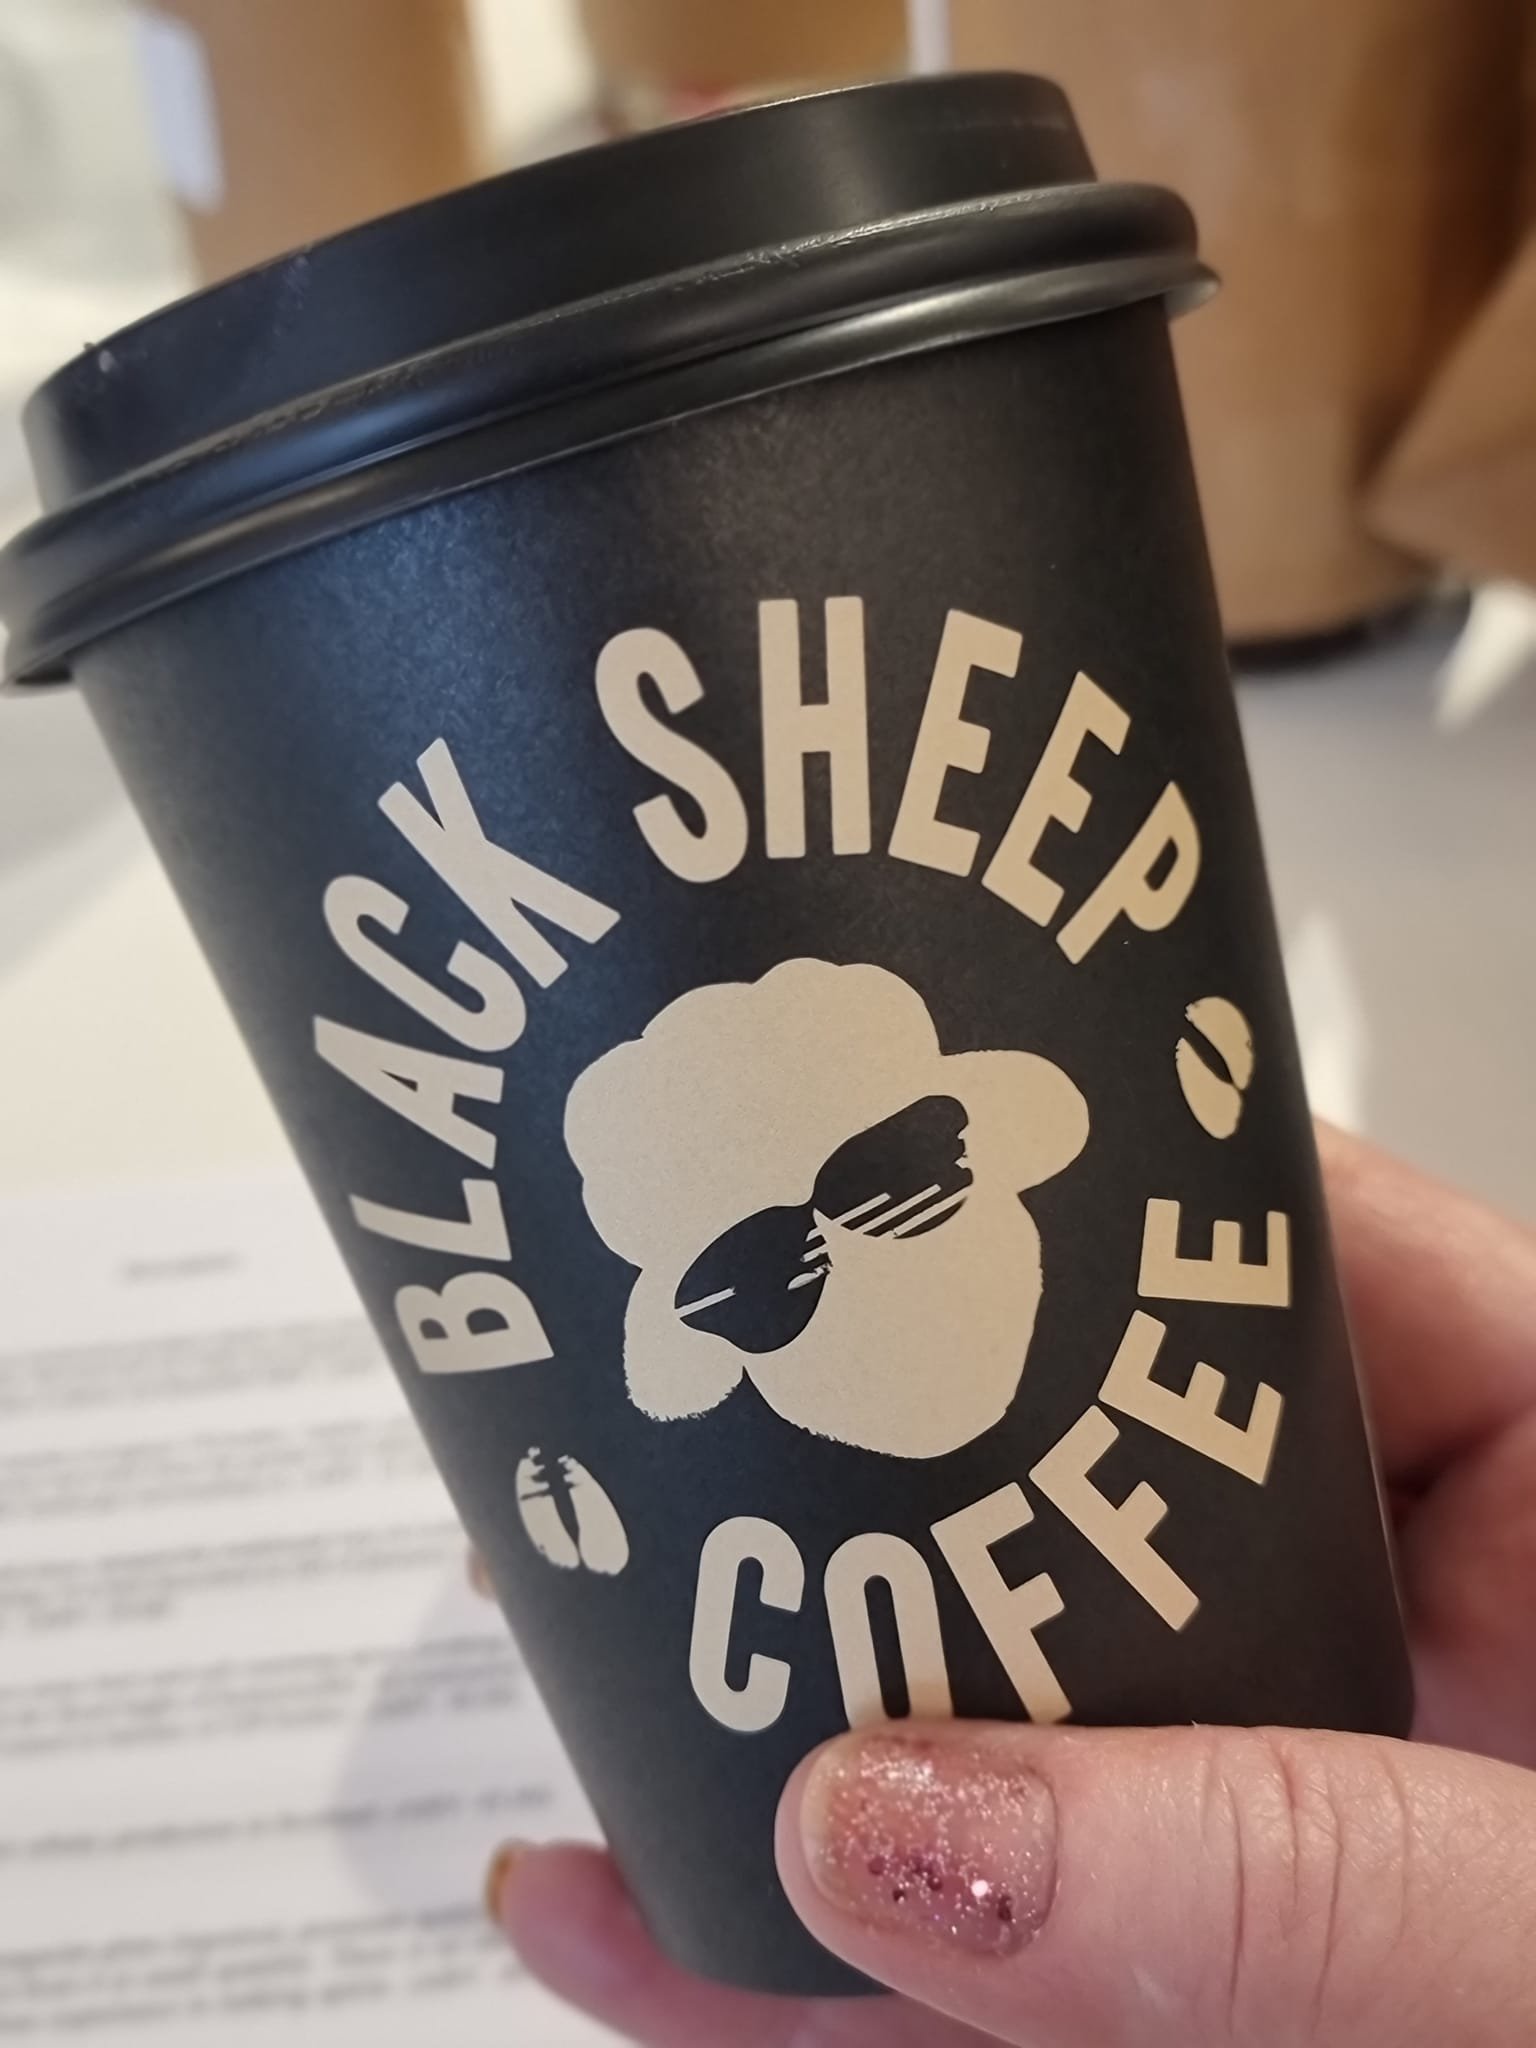 Black sheep london coffee.jpg